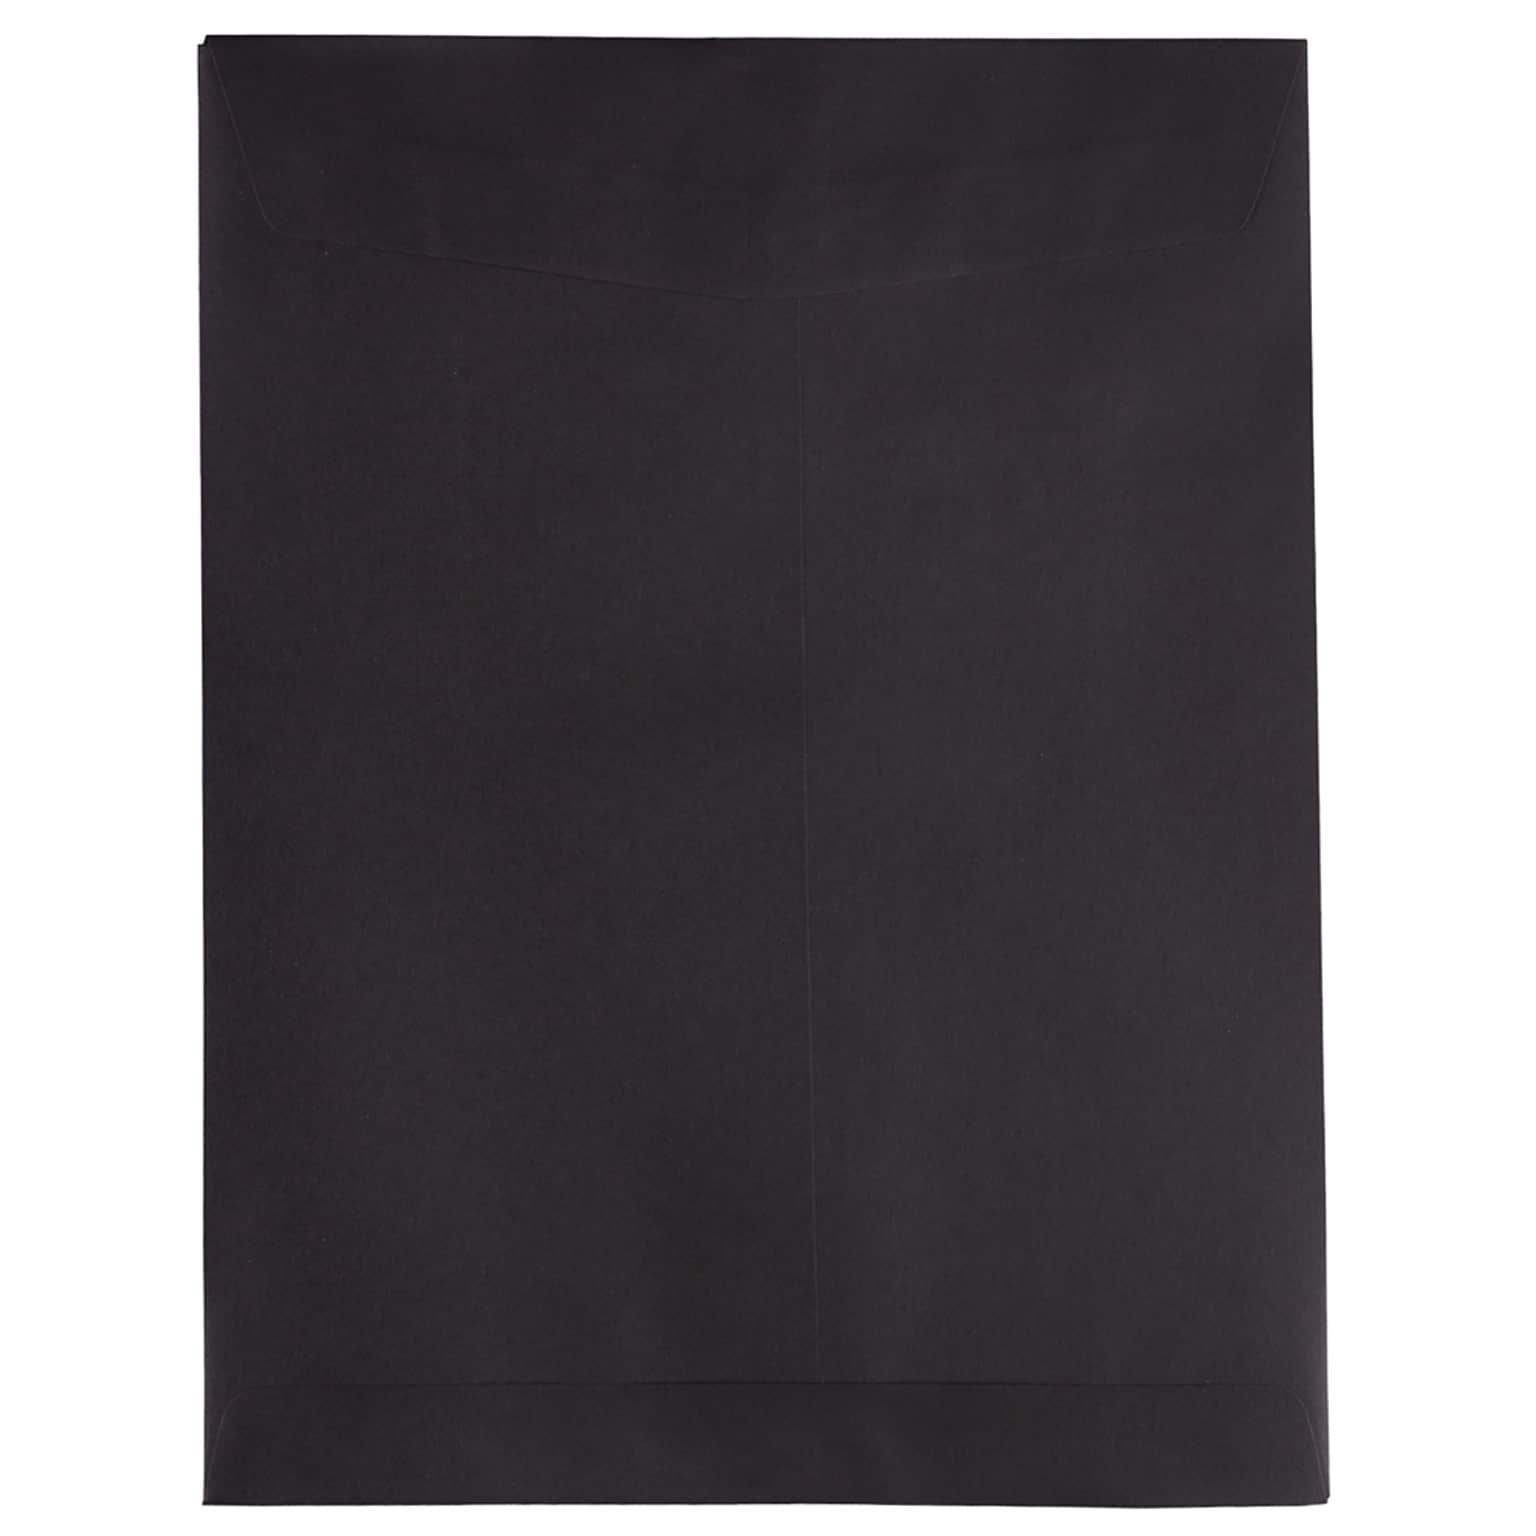 JAM Paper 10 x 13 Open End Catalog Envelopes, Black, 25/Pack (87733a)